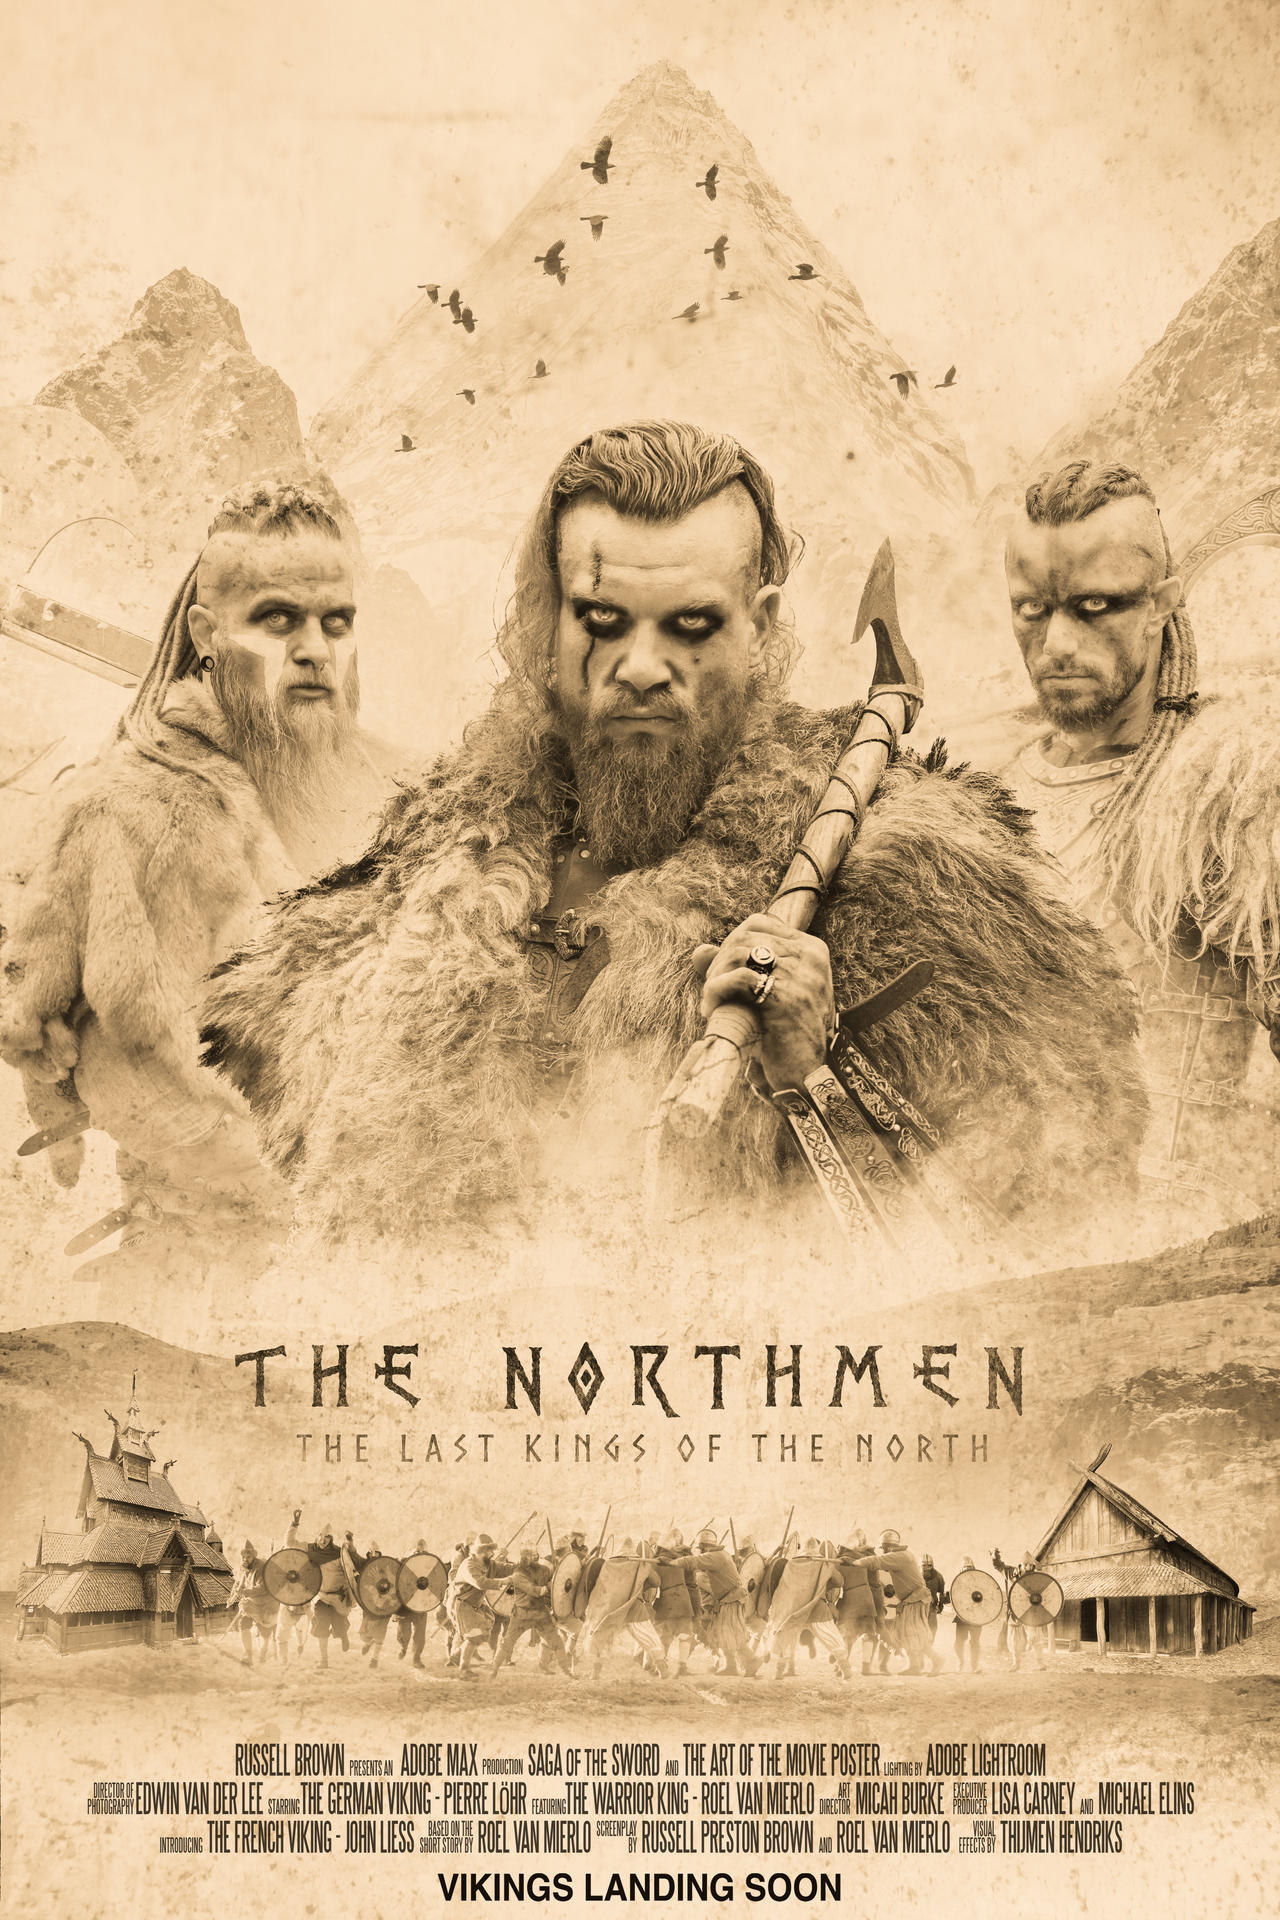 Saga of the Sword Poster - The Northmen by Klockheed1 on DeviantArt